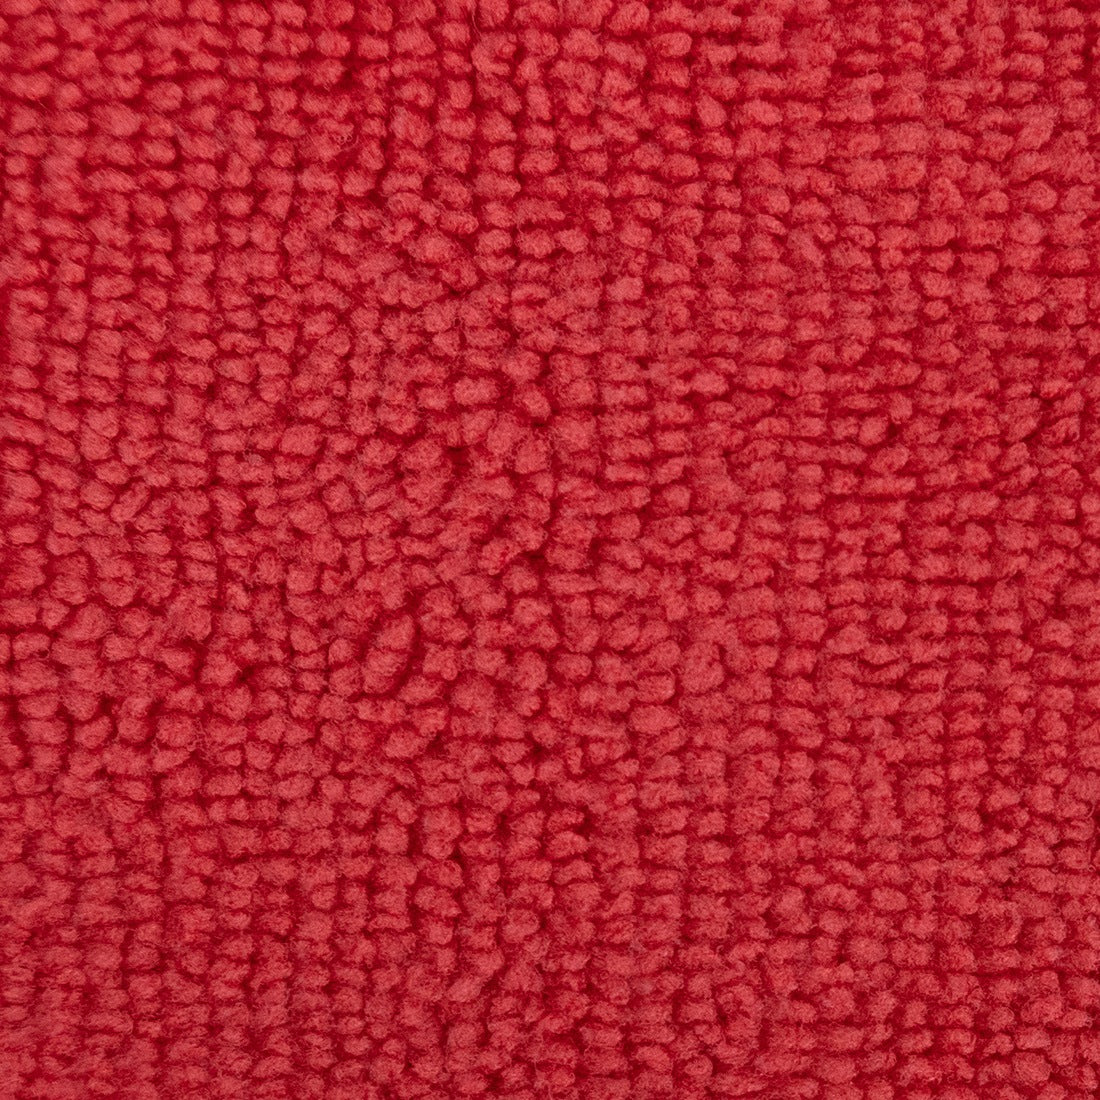 XERO Microfiber Towel Red Detail View